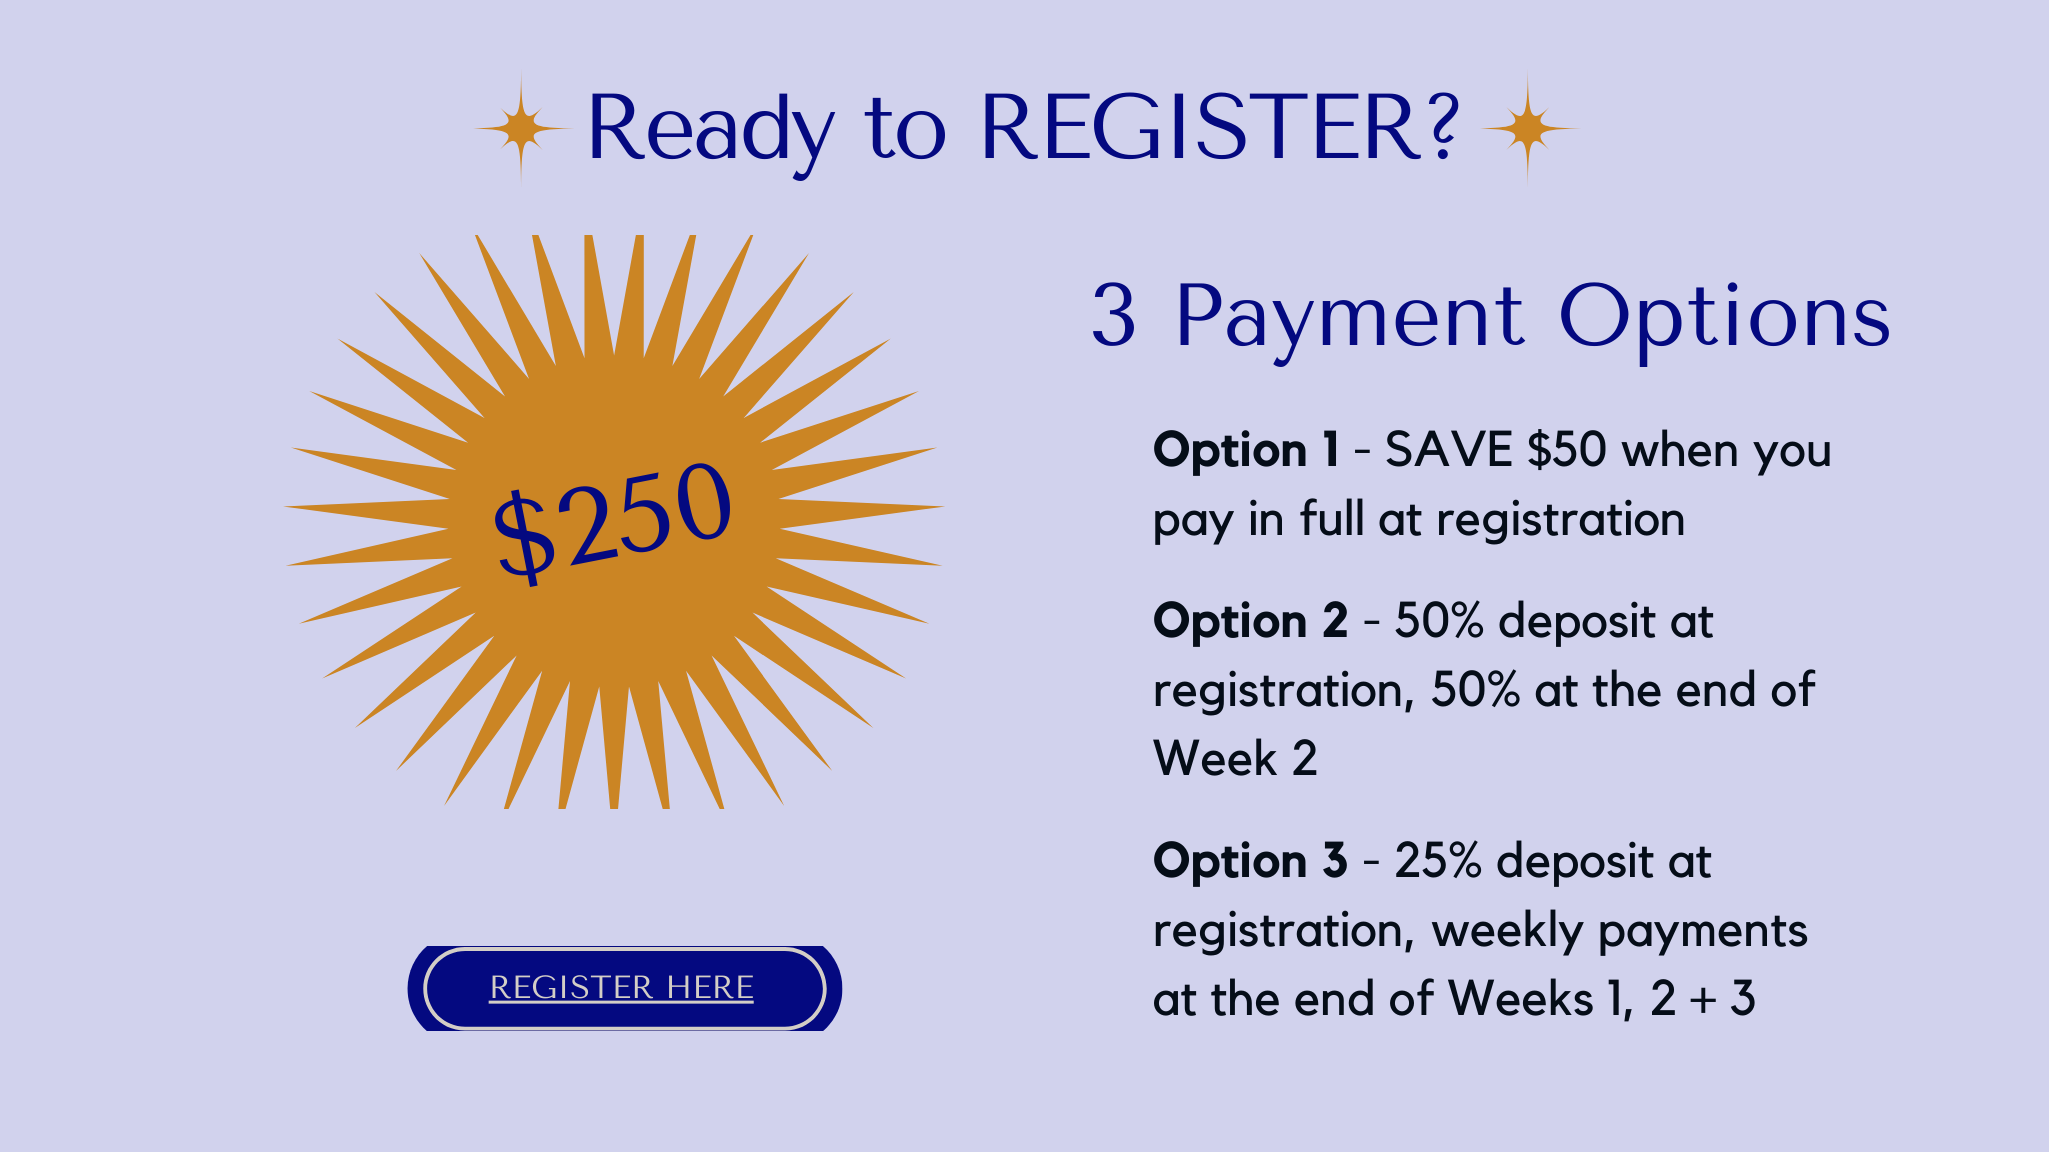 Registration + Payment options